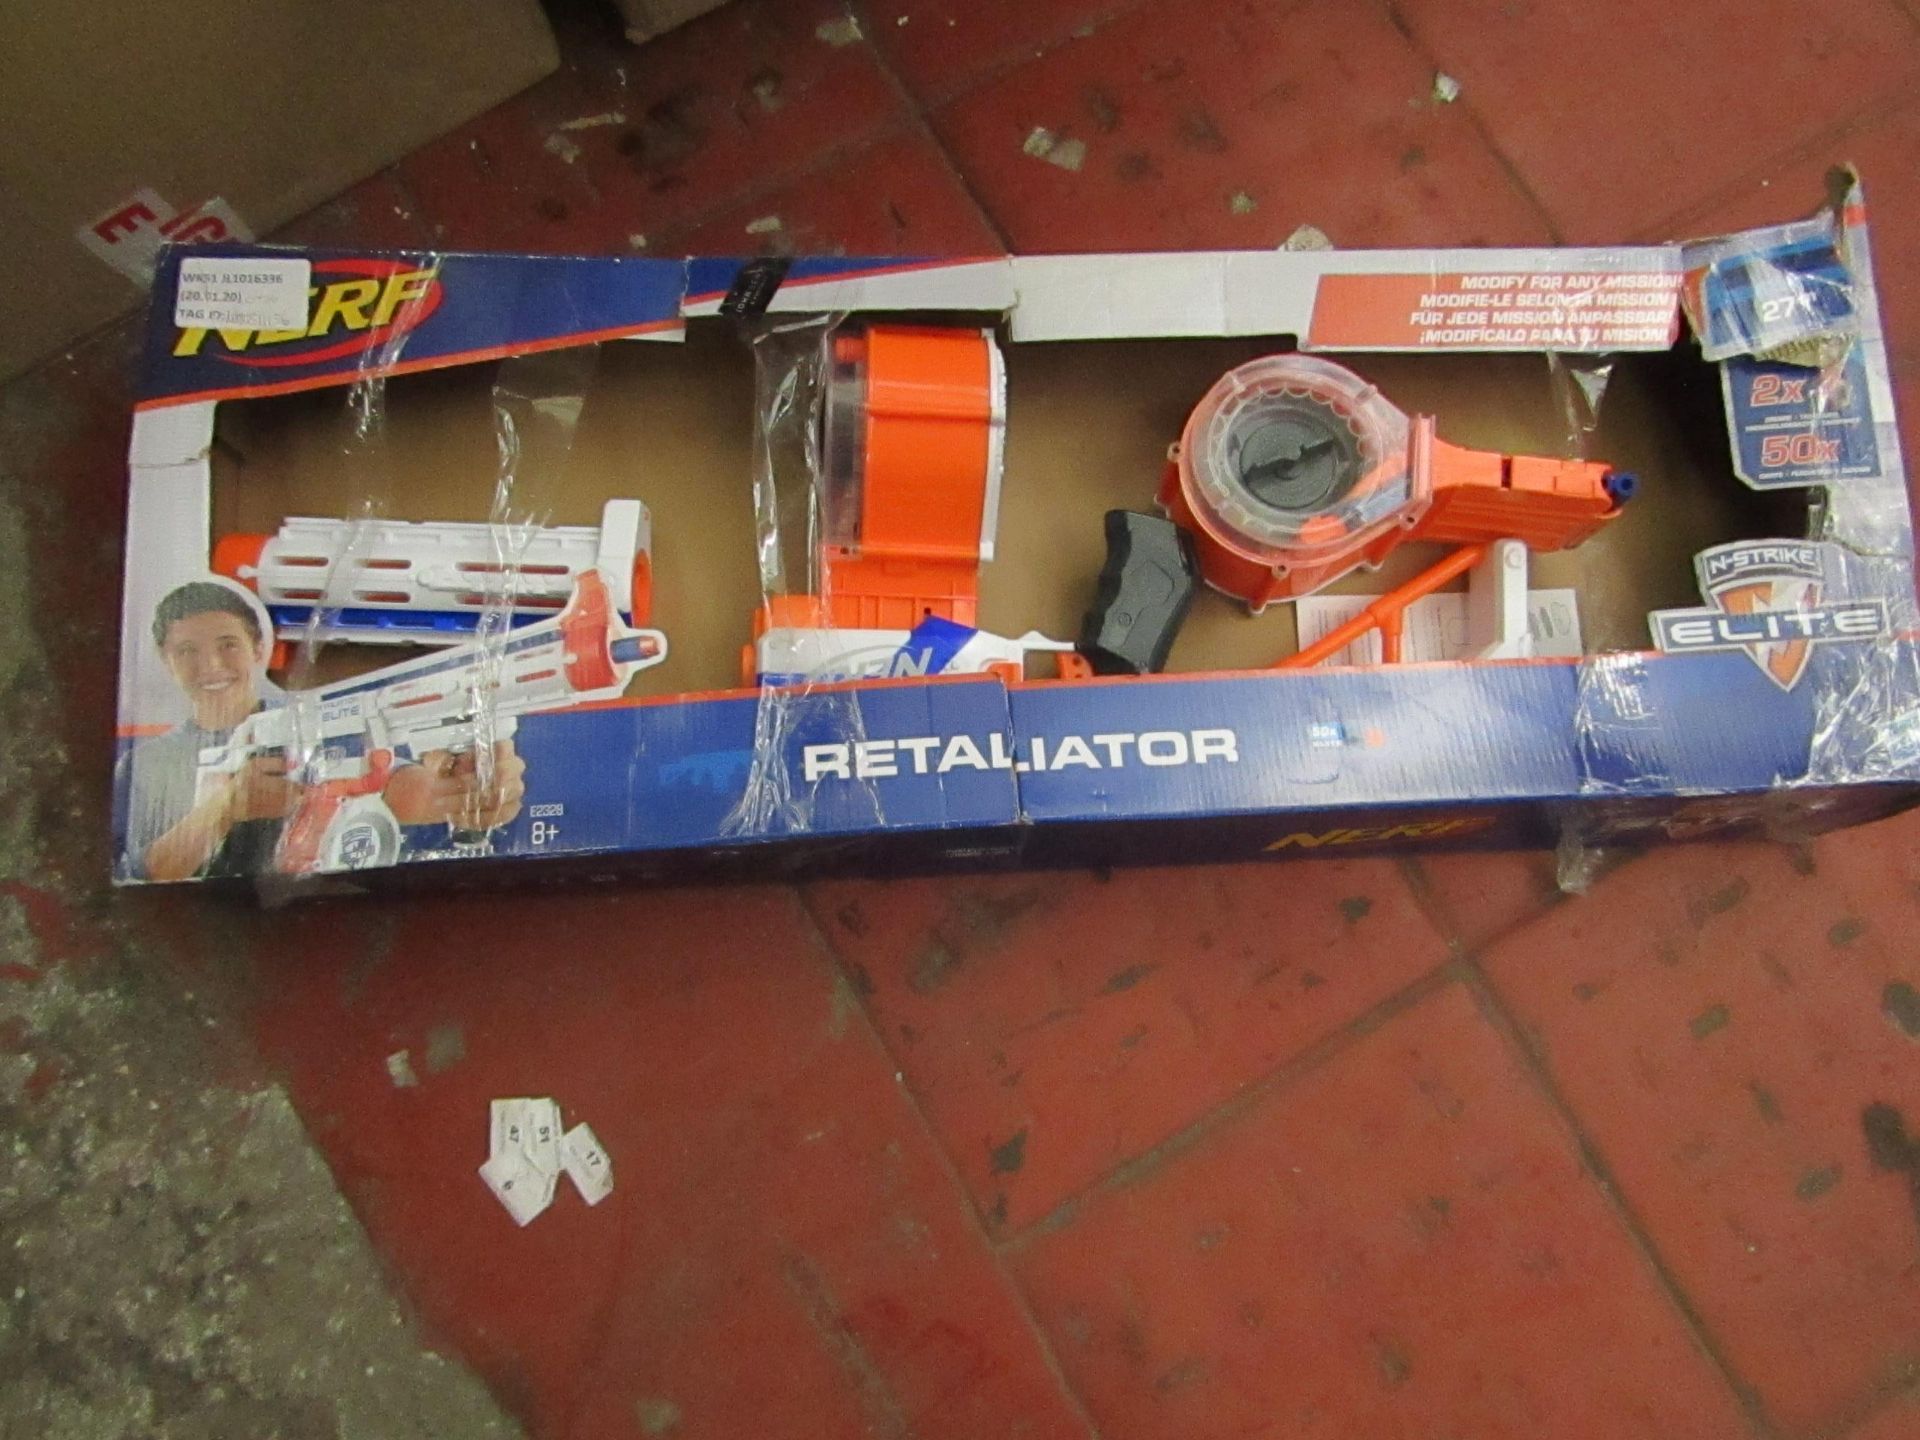 Nerf Retaliator Toy Gun - Damage to Packaging & Unchecked